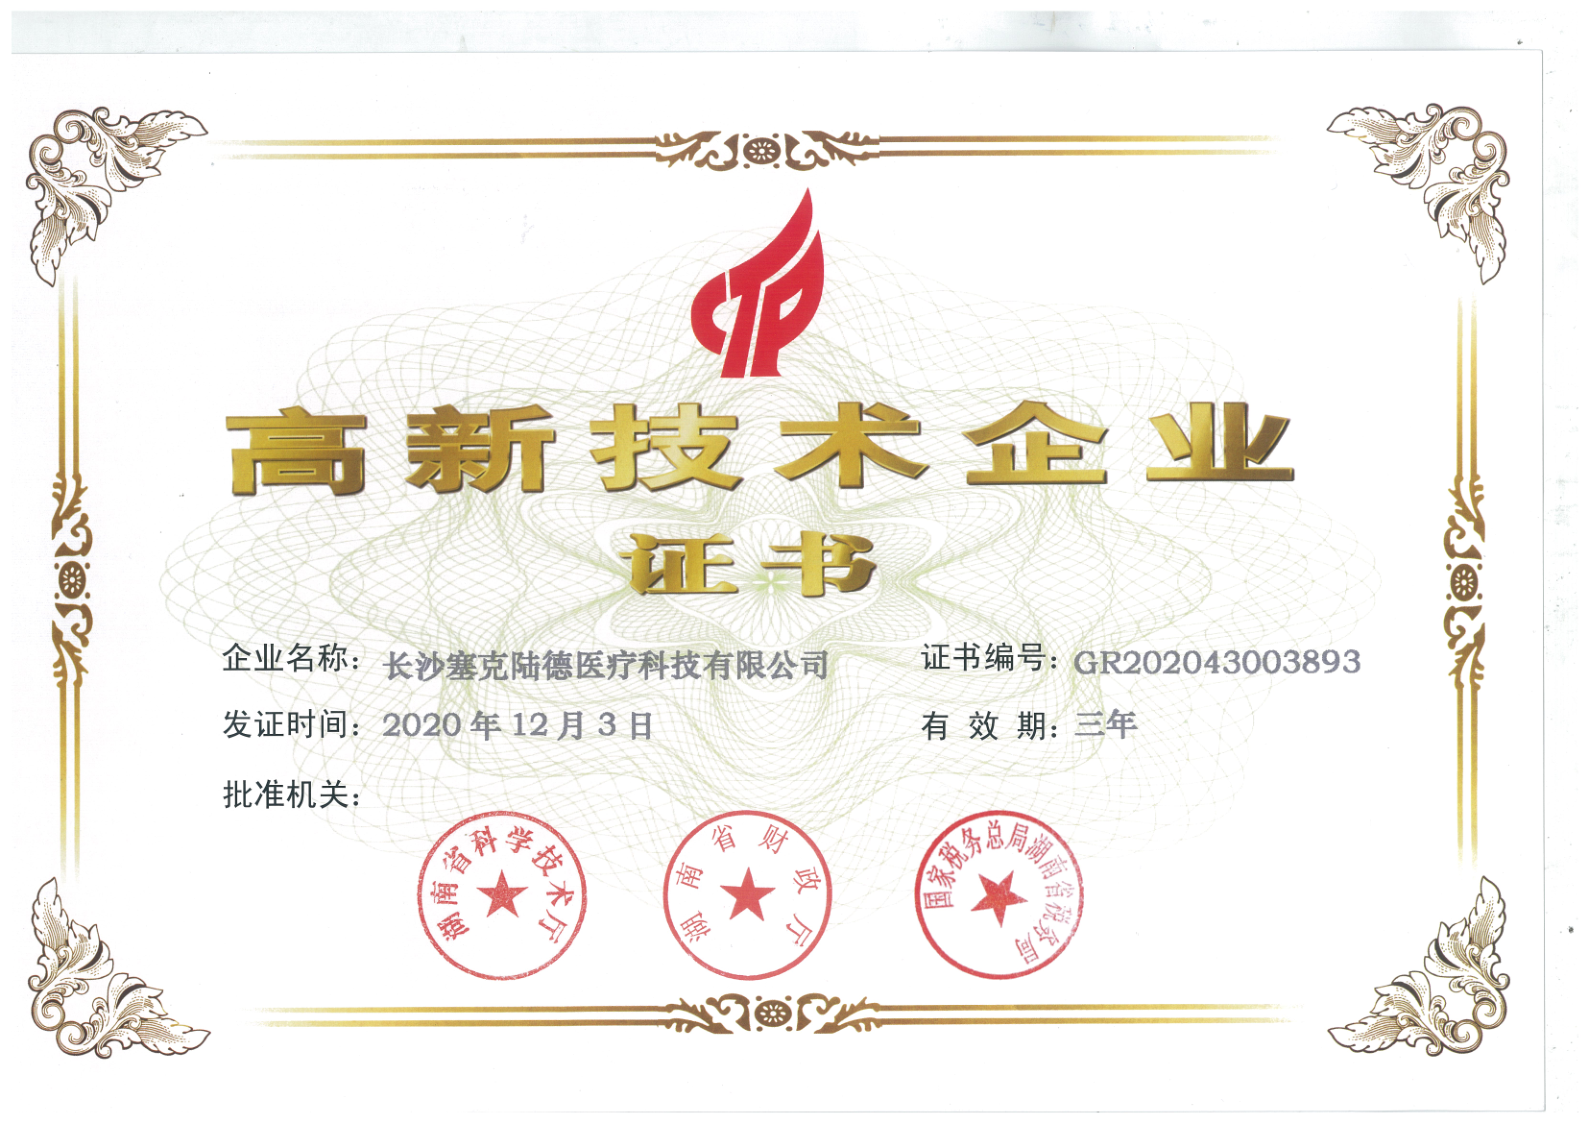 High Technology Enterprise Recognition Certificate